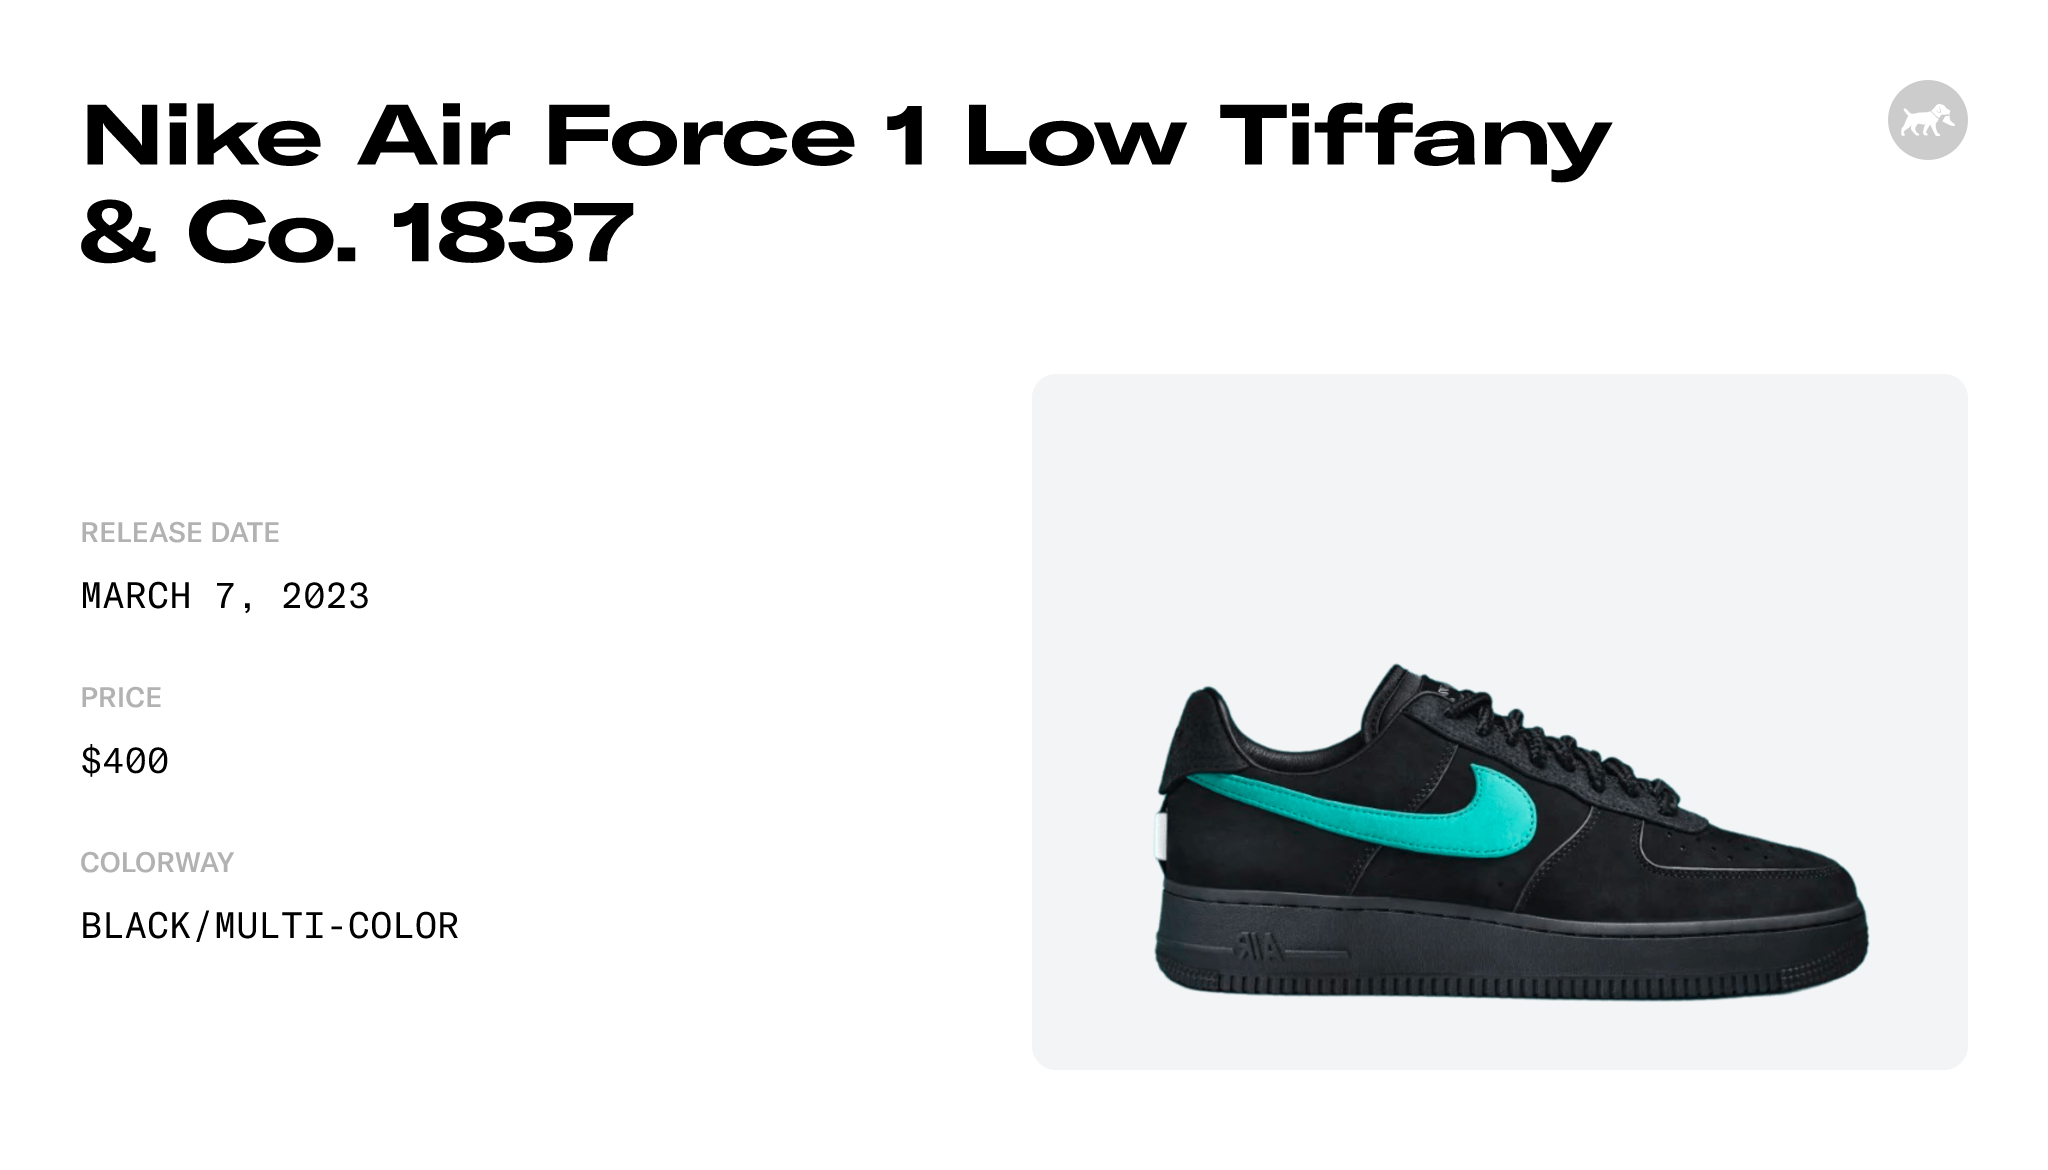 Nike/Tiffany Air Force 1 1837